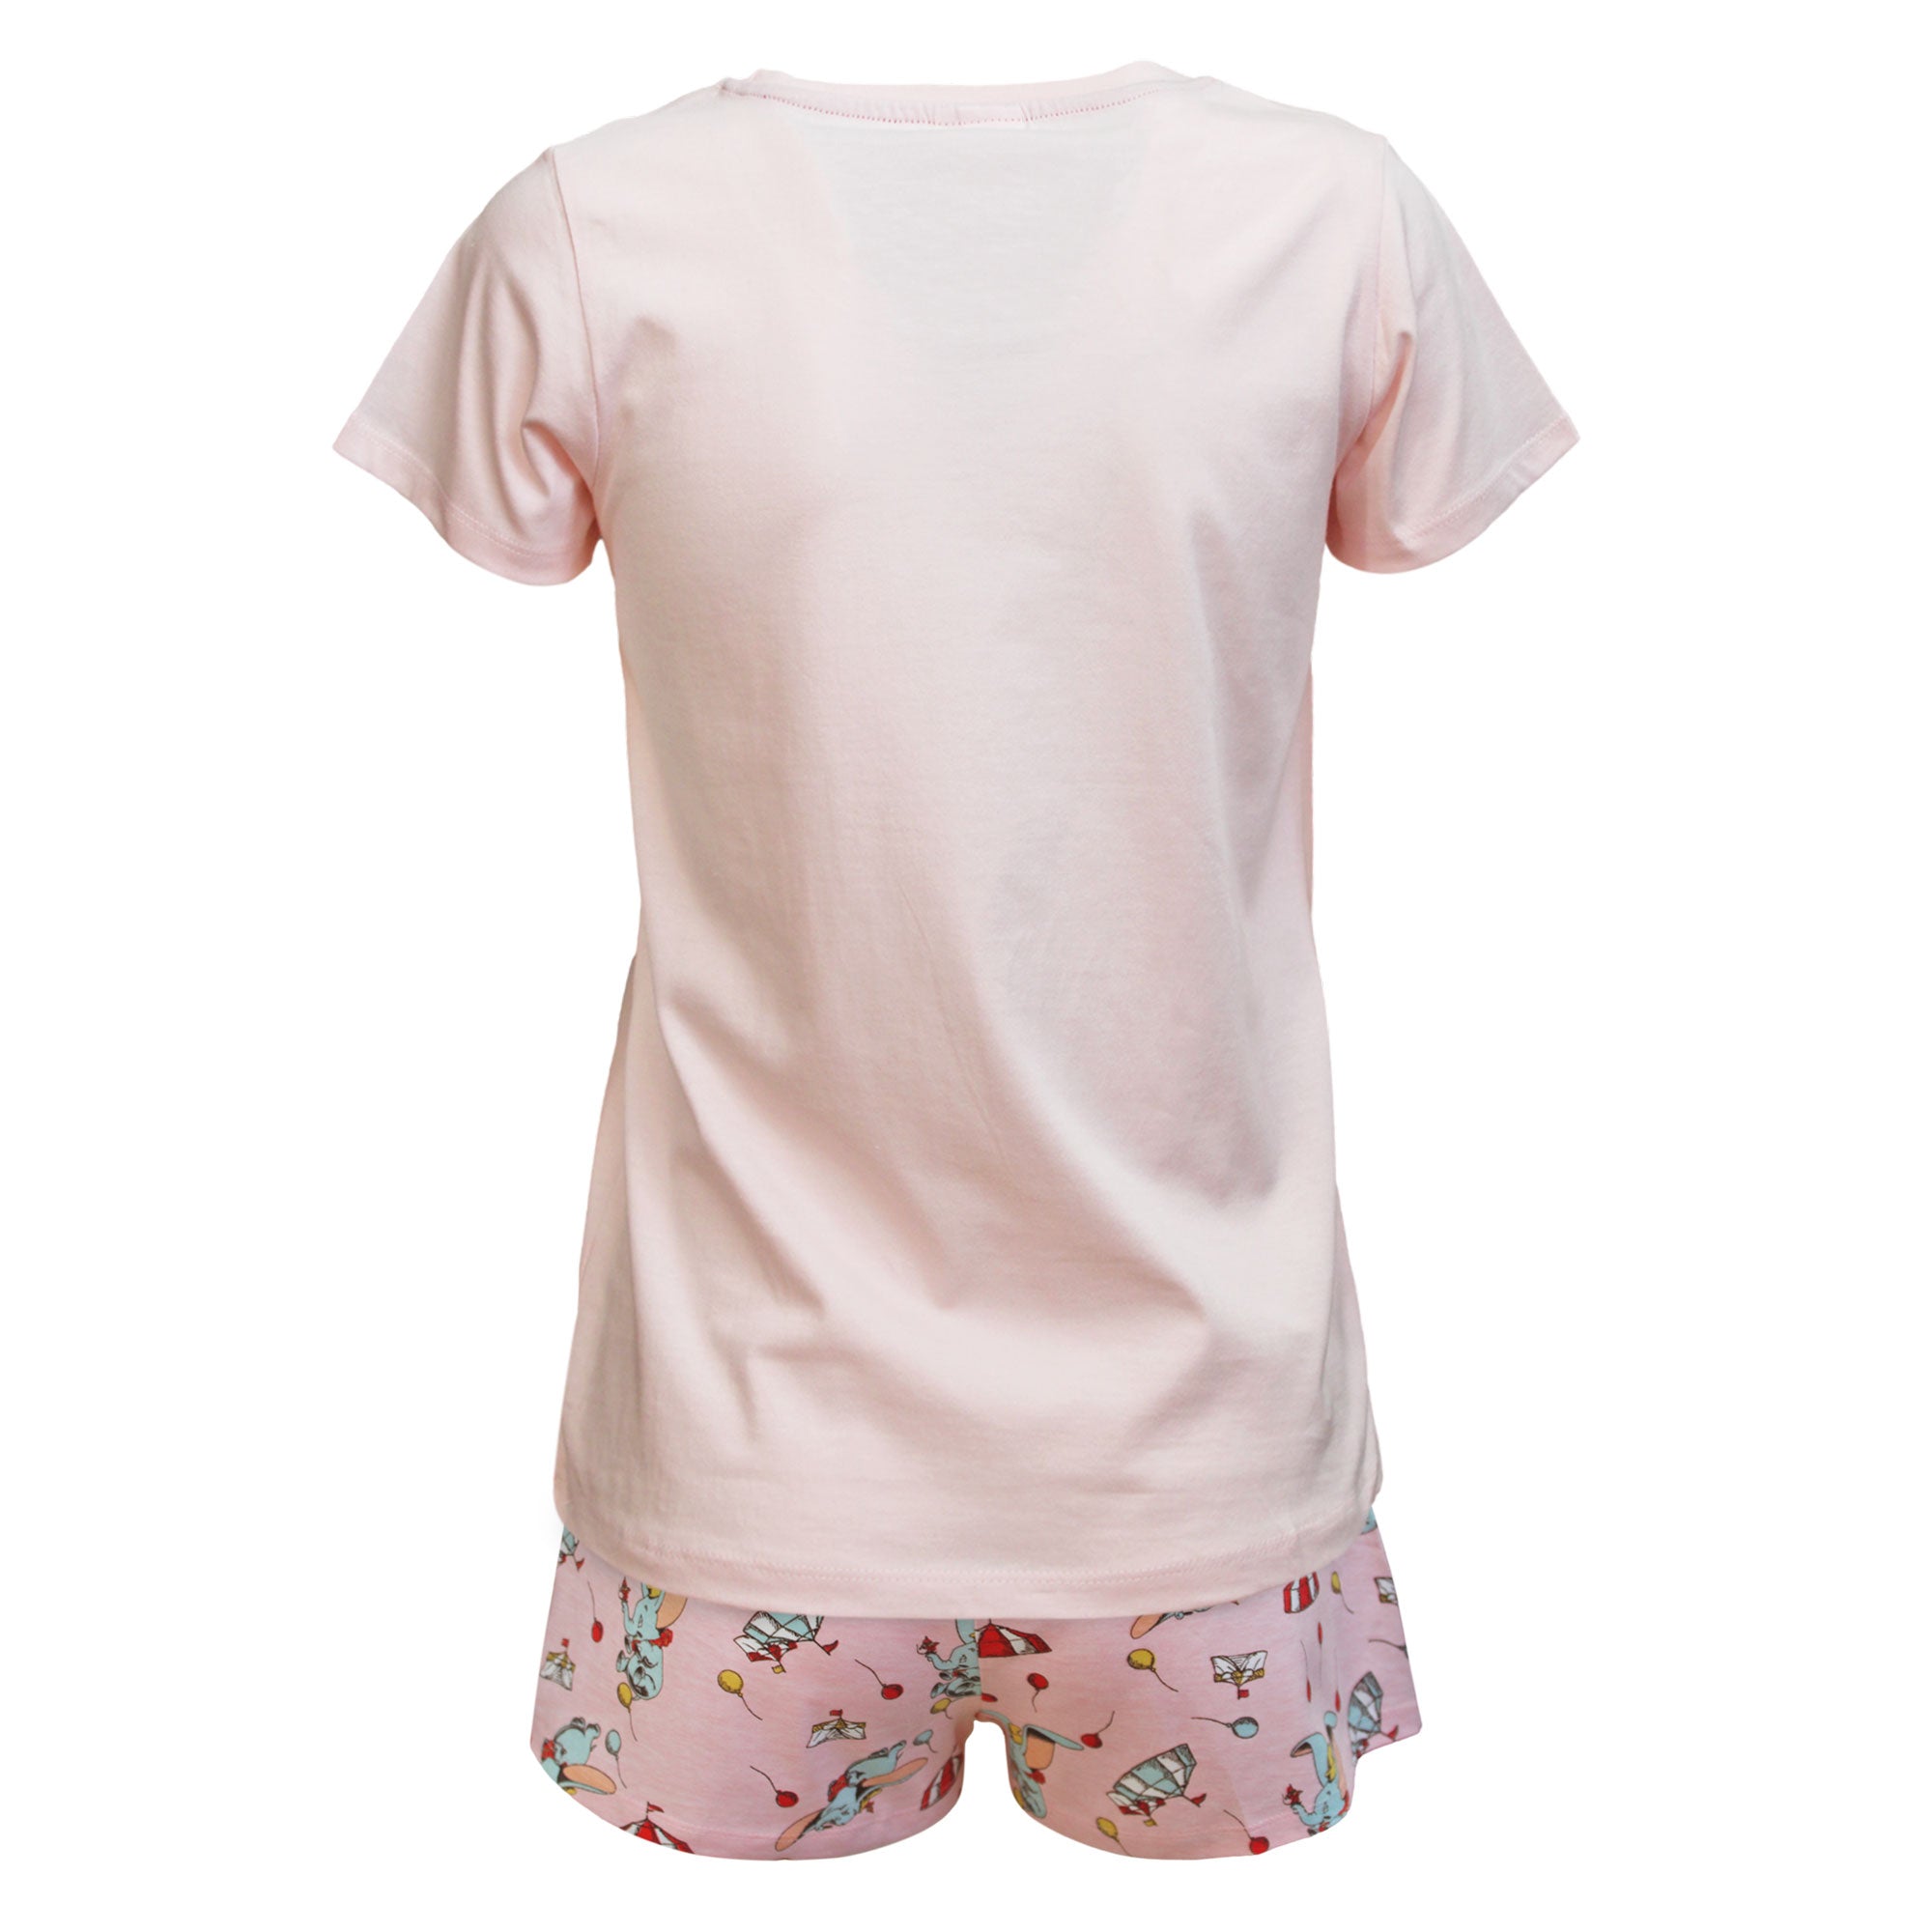 Pigiama donna Disney Dumbo T-shirt e shorties ragazza in cotone 6578